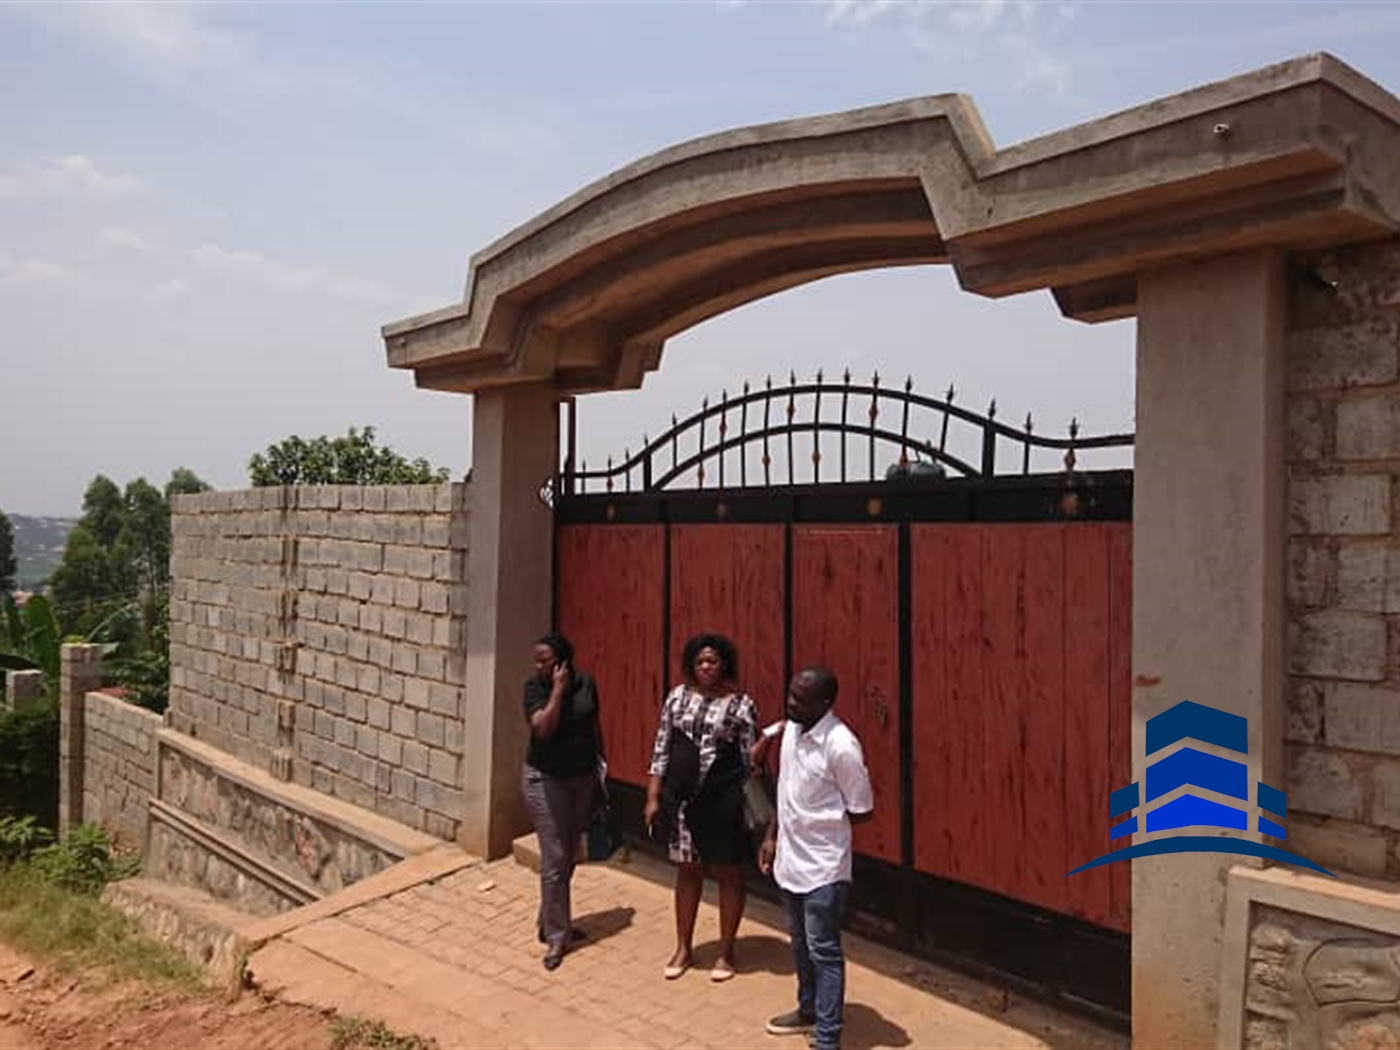 Villa for sale in Seguku Wakiso